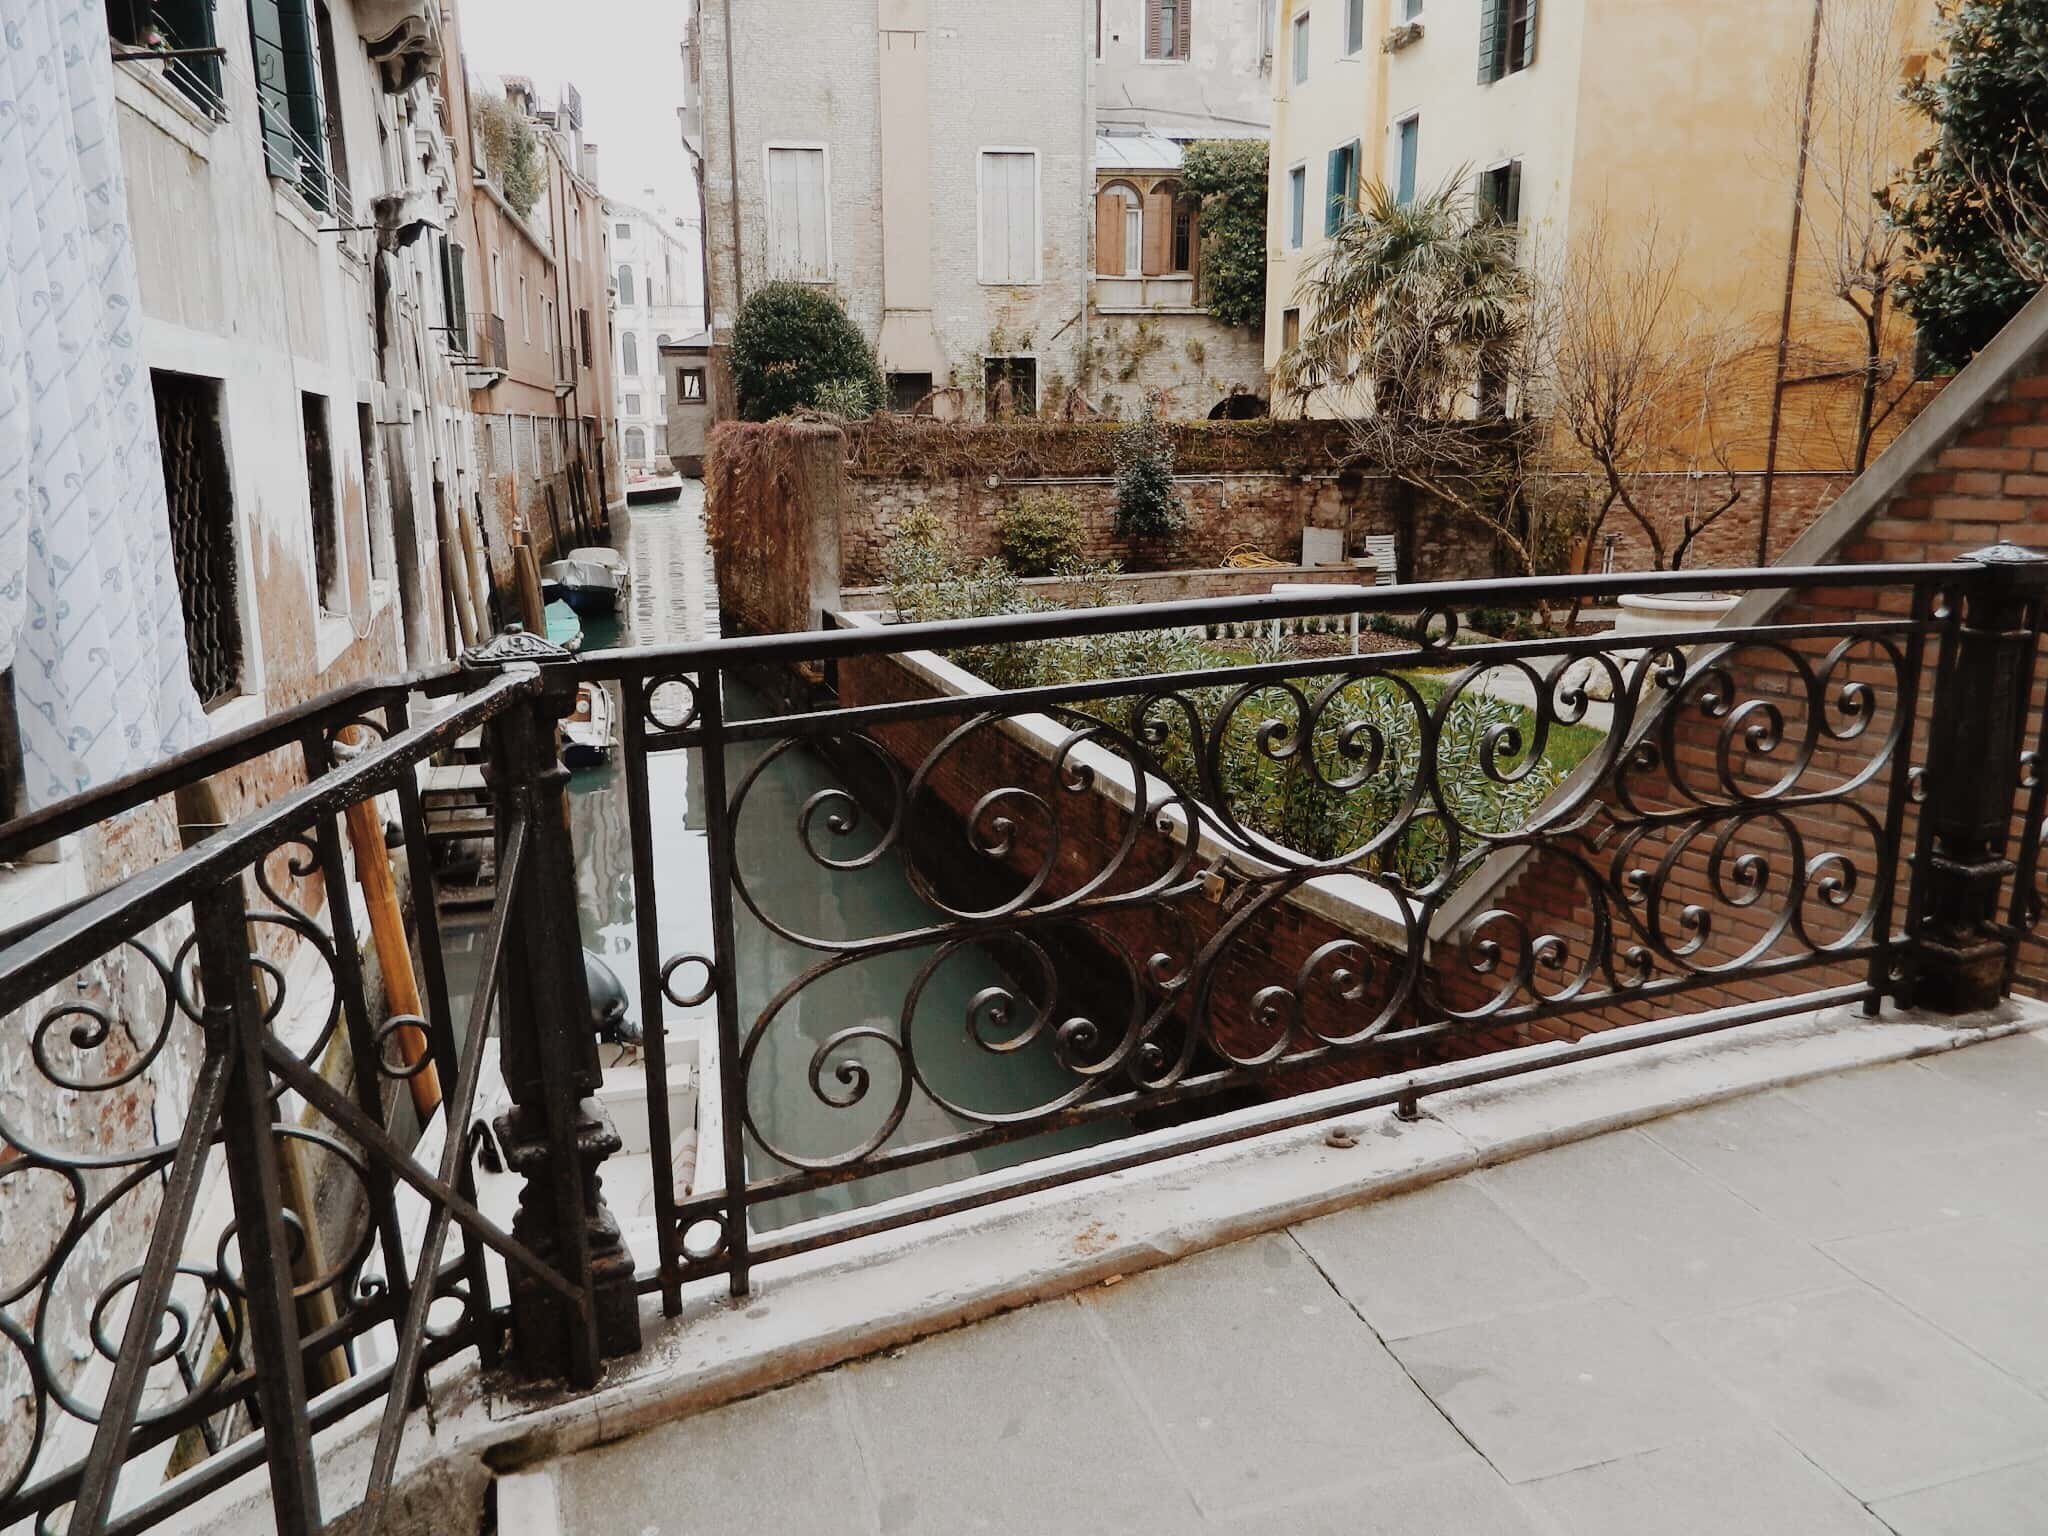 Travel Diaries: Venice, Italy